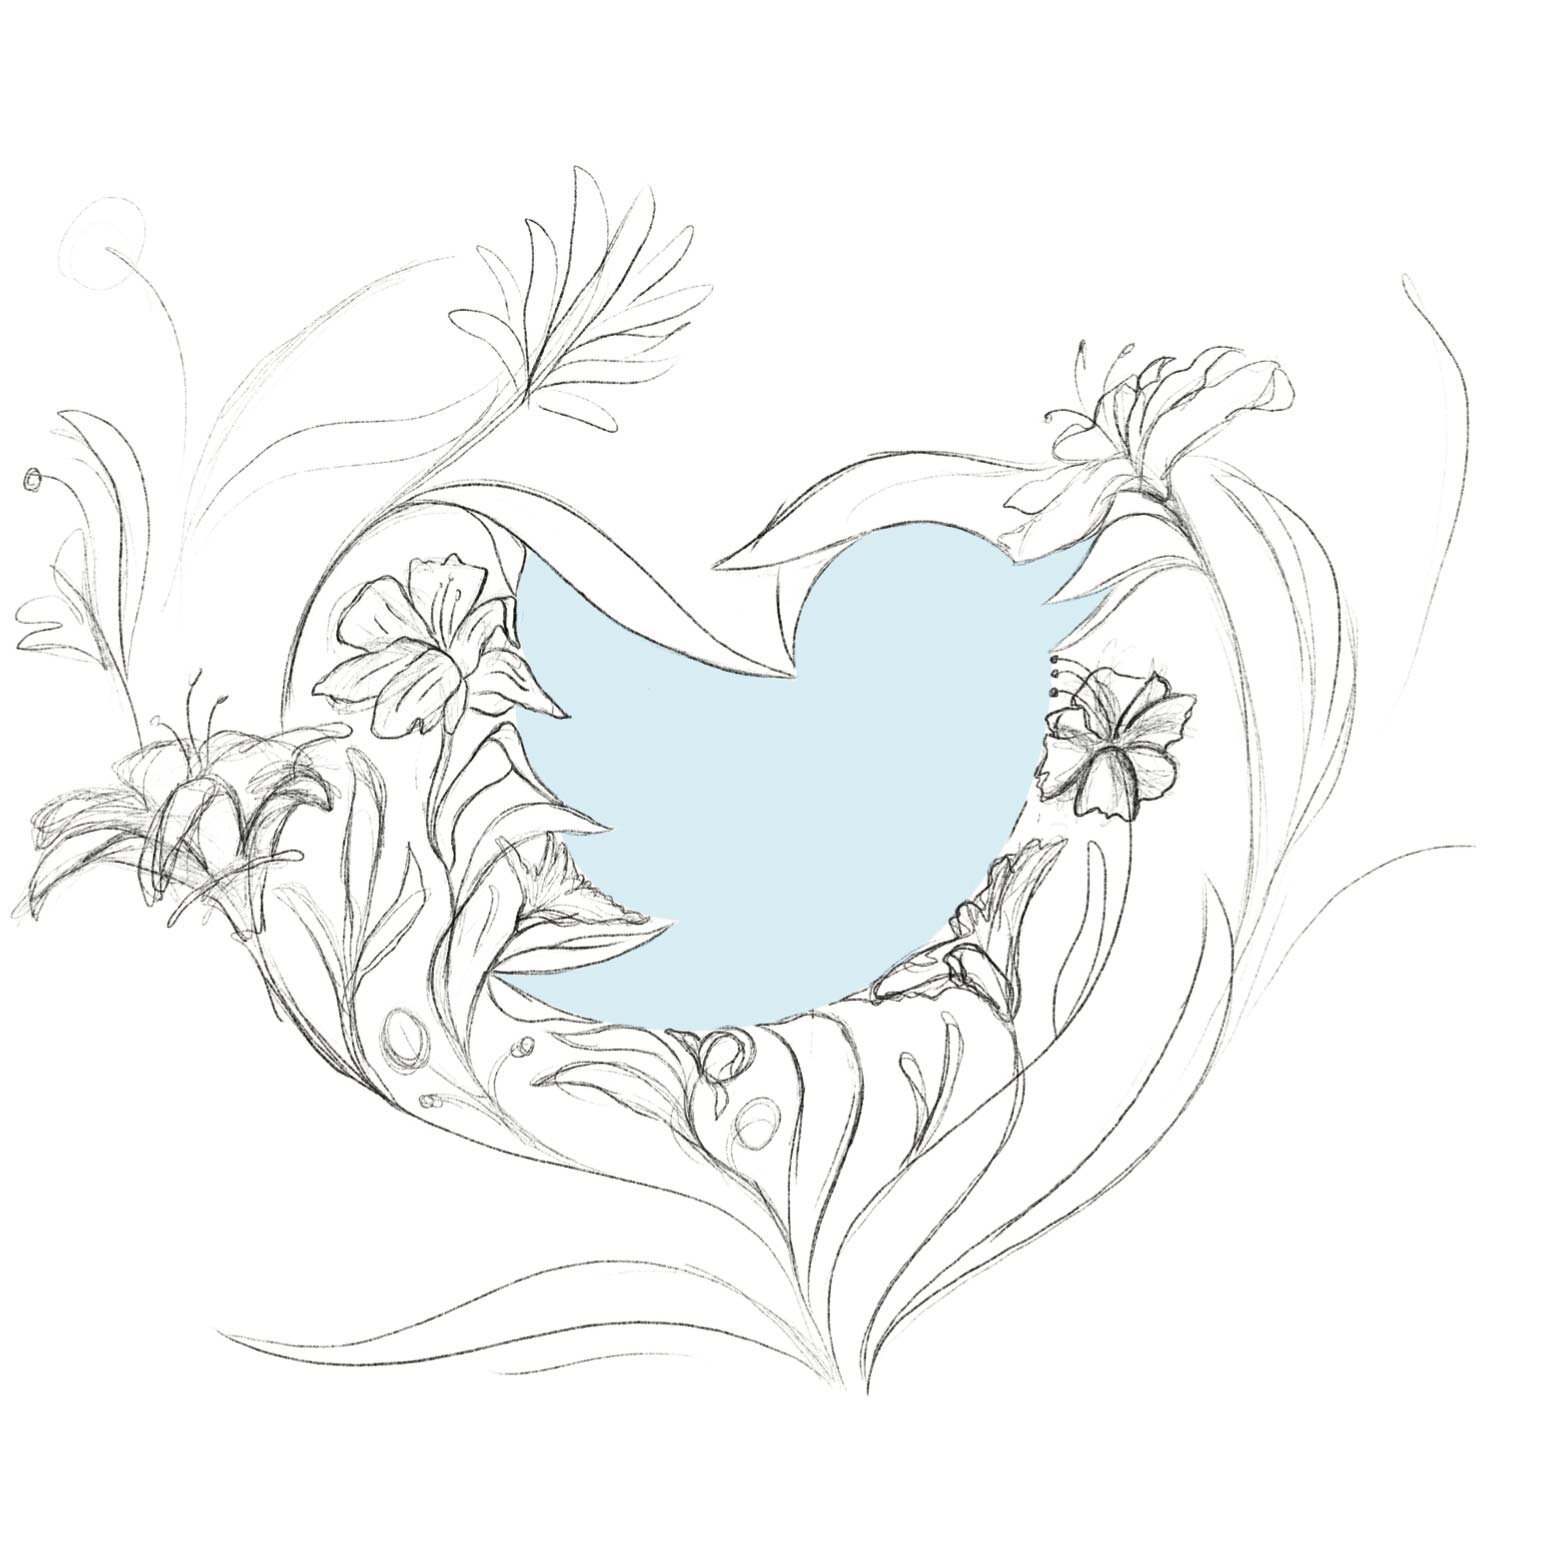 Twitter-illustration-sketch-4.jpg